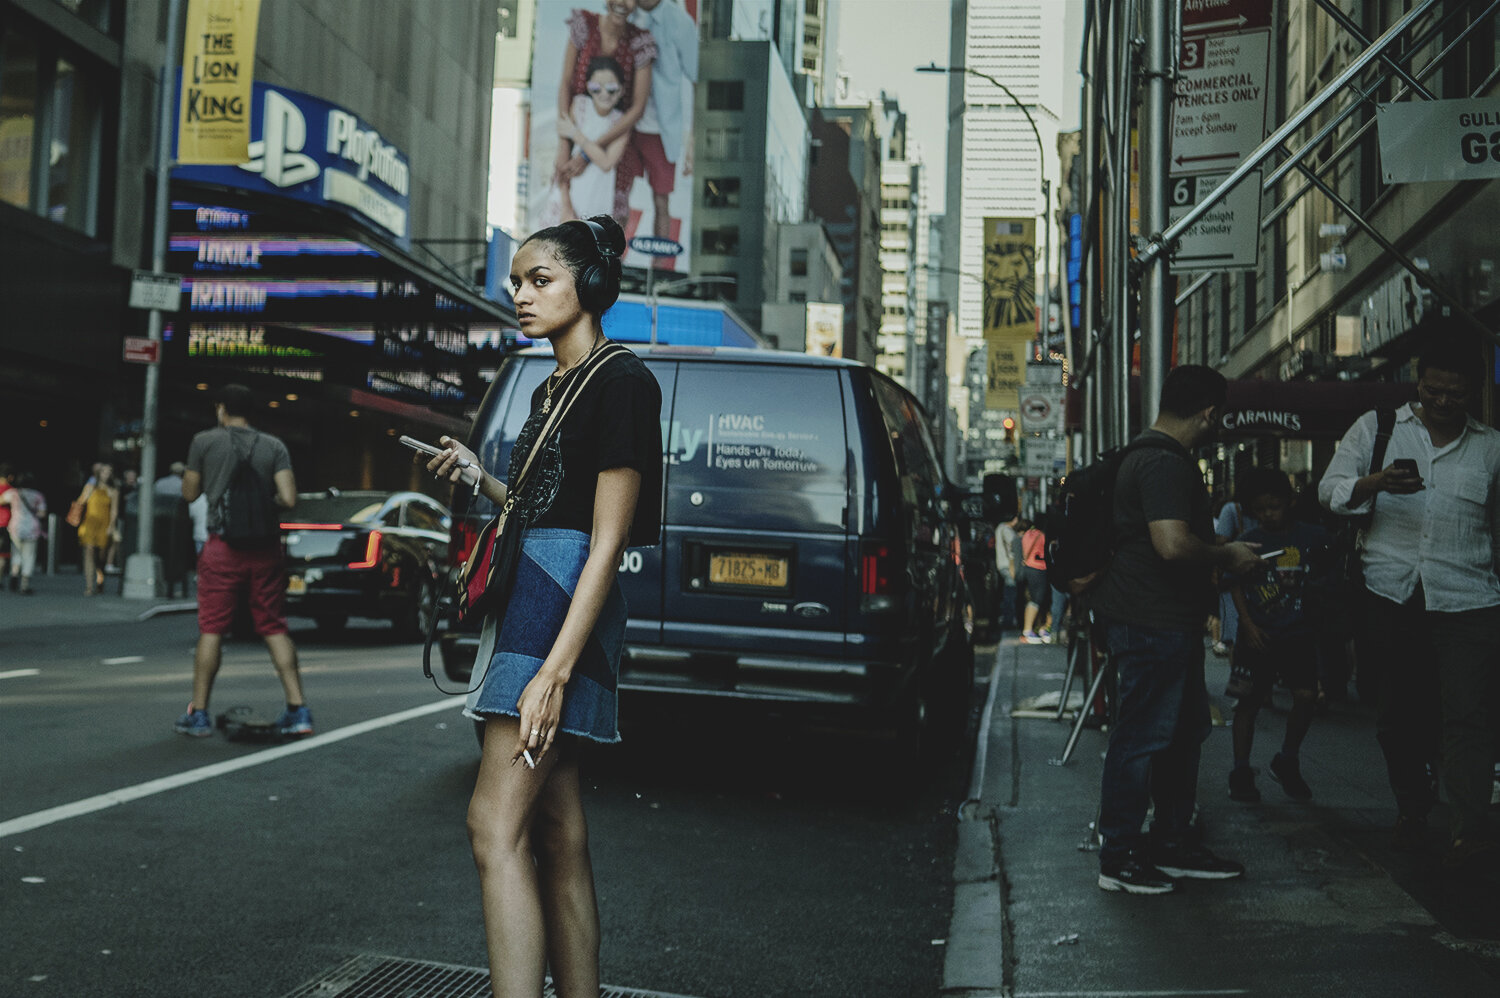 NYC_Street_2018_Hispanic_Girl_Midtown_Waiting-001crp.jpg